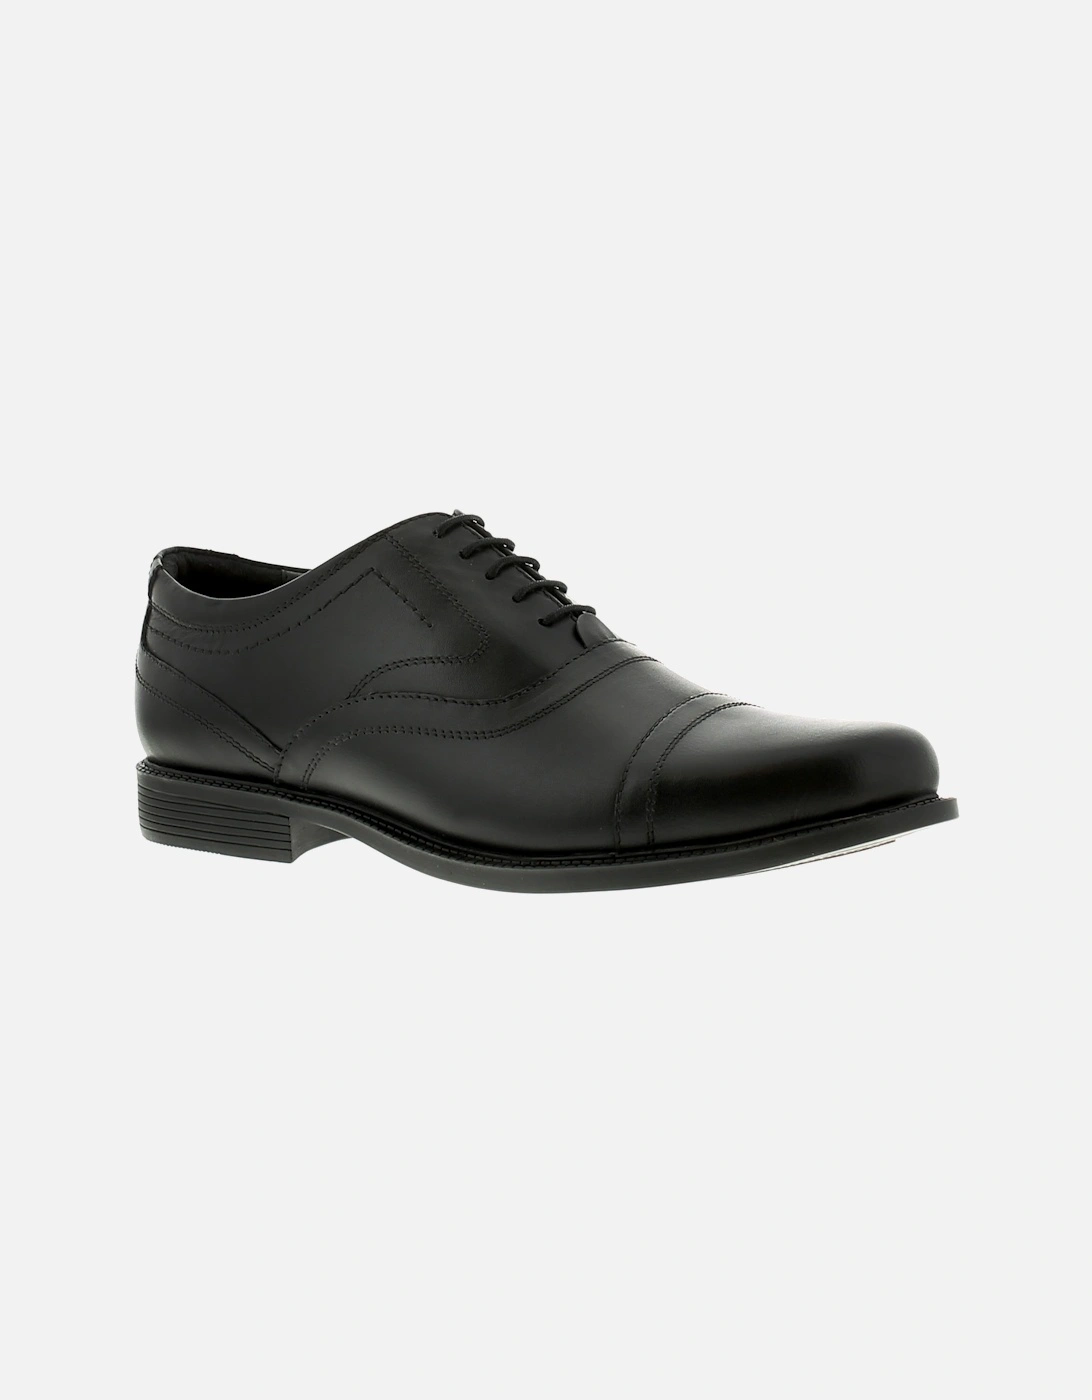 Mens Shoes Work School Formal Beetle Leather Lace Up black UK Siz, 6 of 5